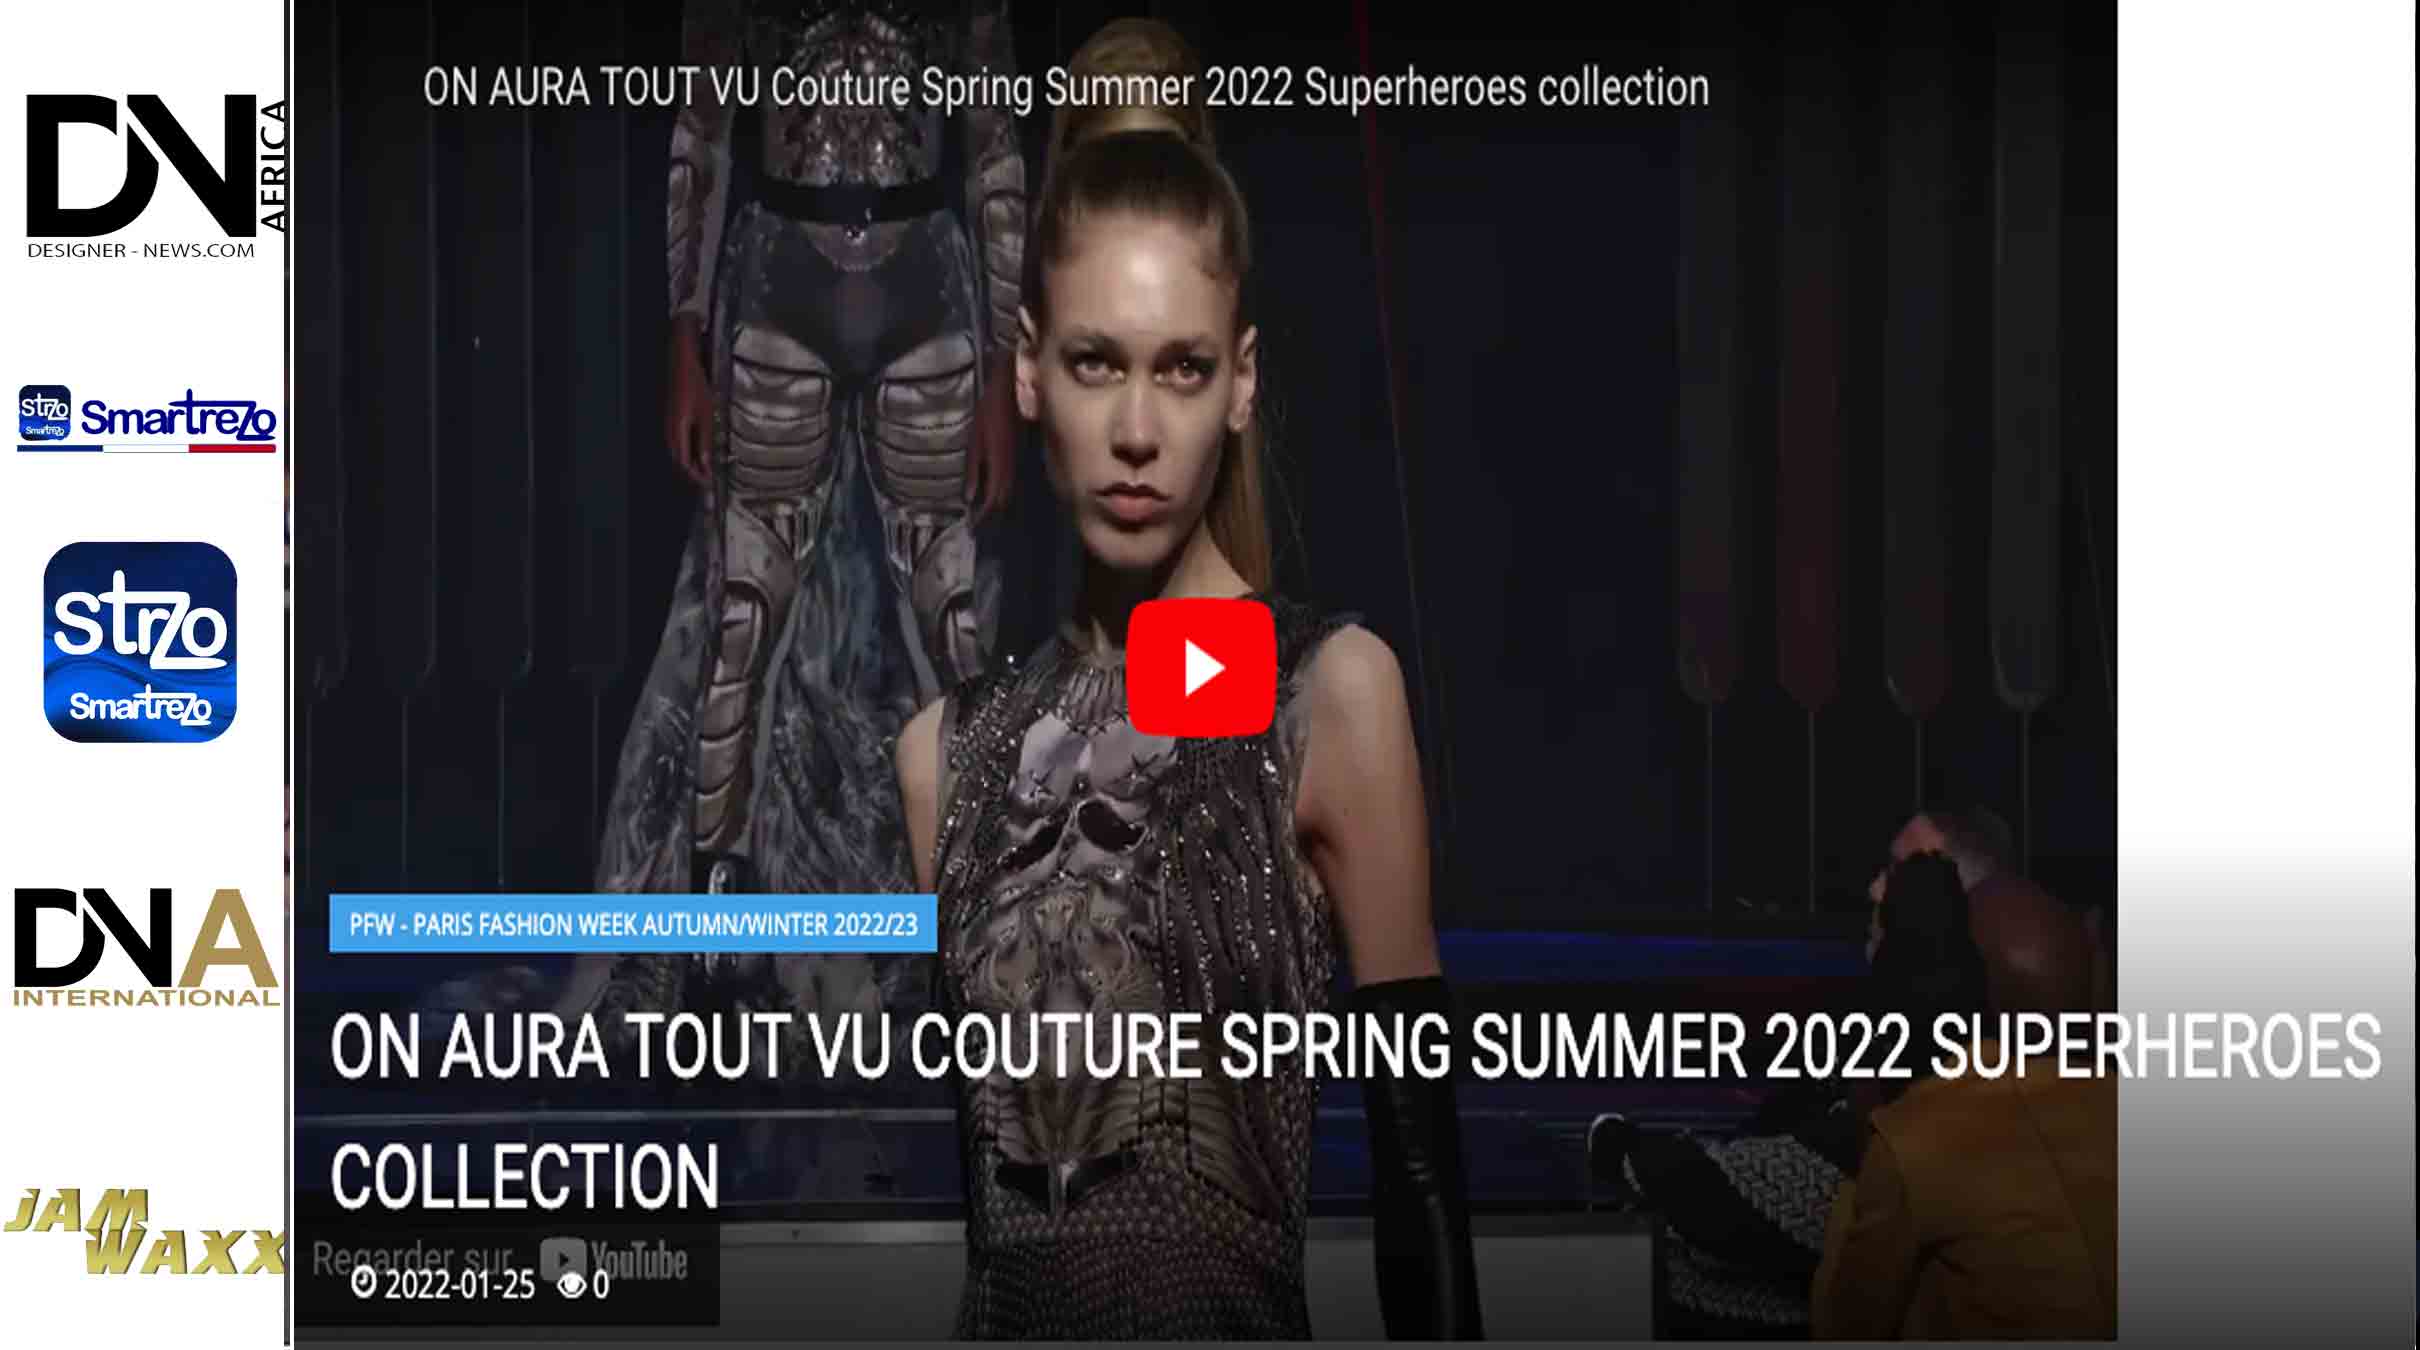 ON-AURA-TOUT-VU-Couture-Spring-Summer-2022-Superheroes-Collection-Couture-Paris-Fashion-Week-DN-AFRICA-DN-A-INTERNATIONAL-Media-Partner